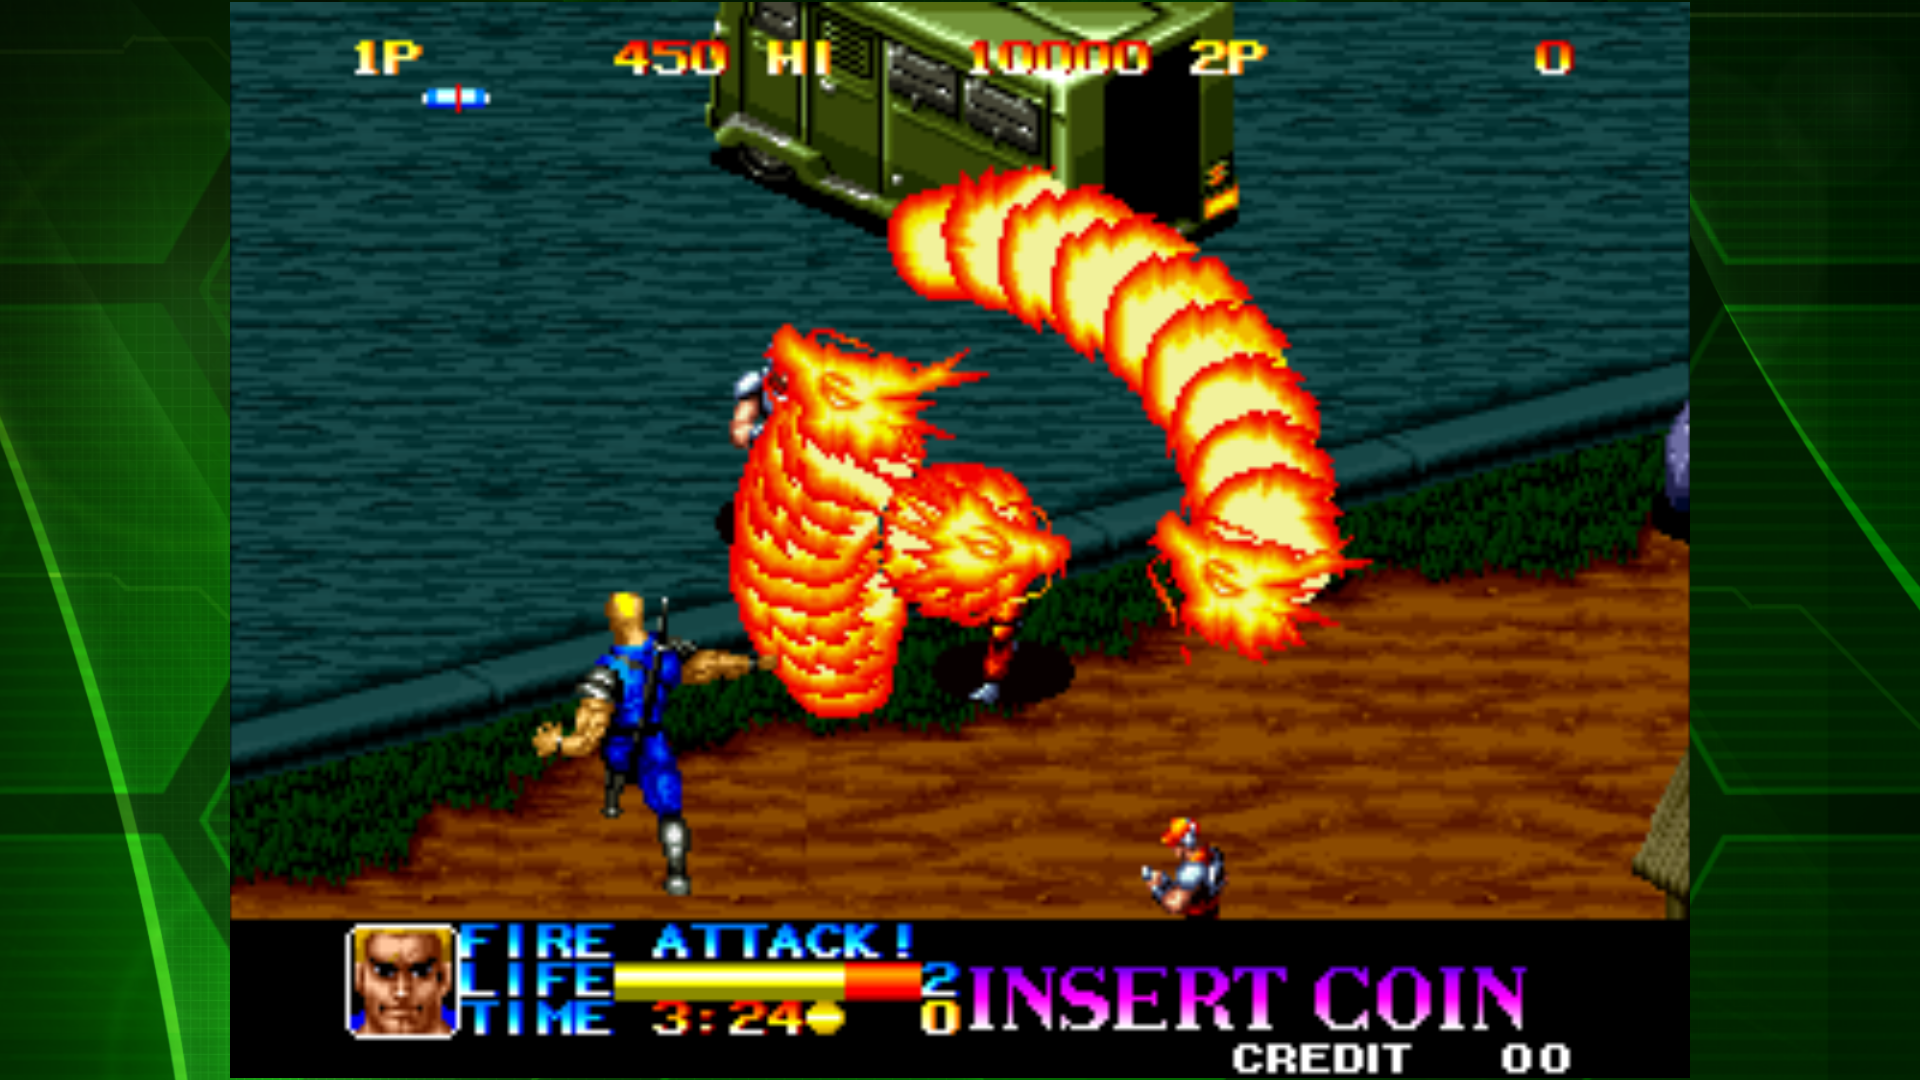 1992-Released Action Game 'Ninja Commando' ACA NeoGeo From SNK and